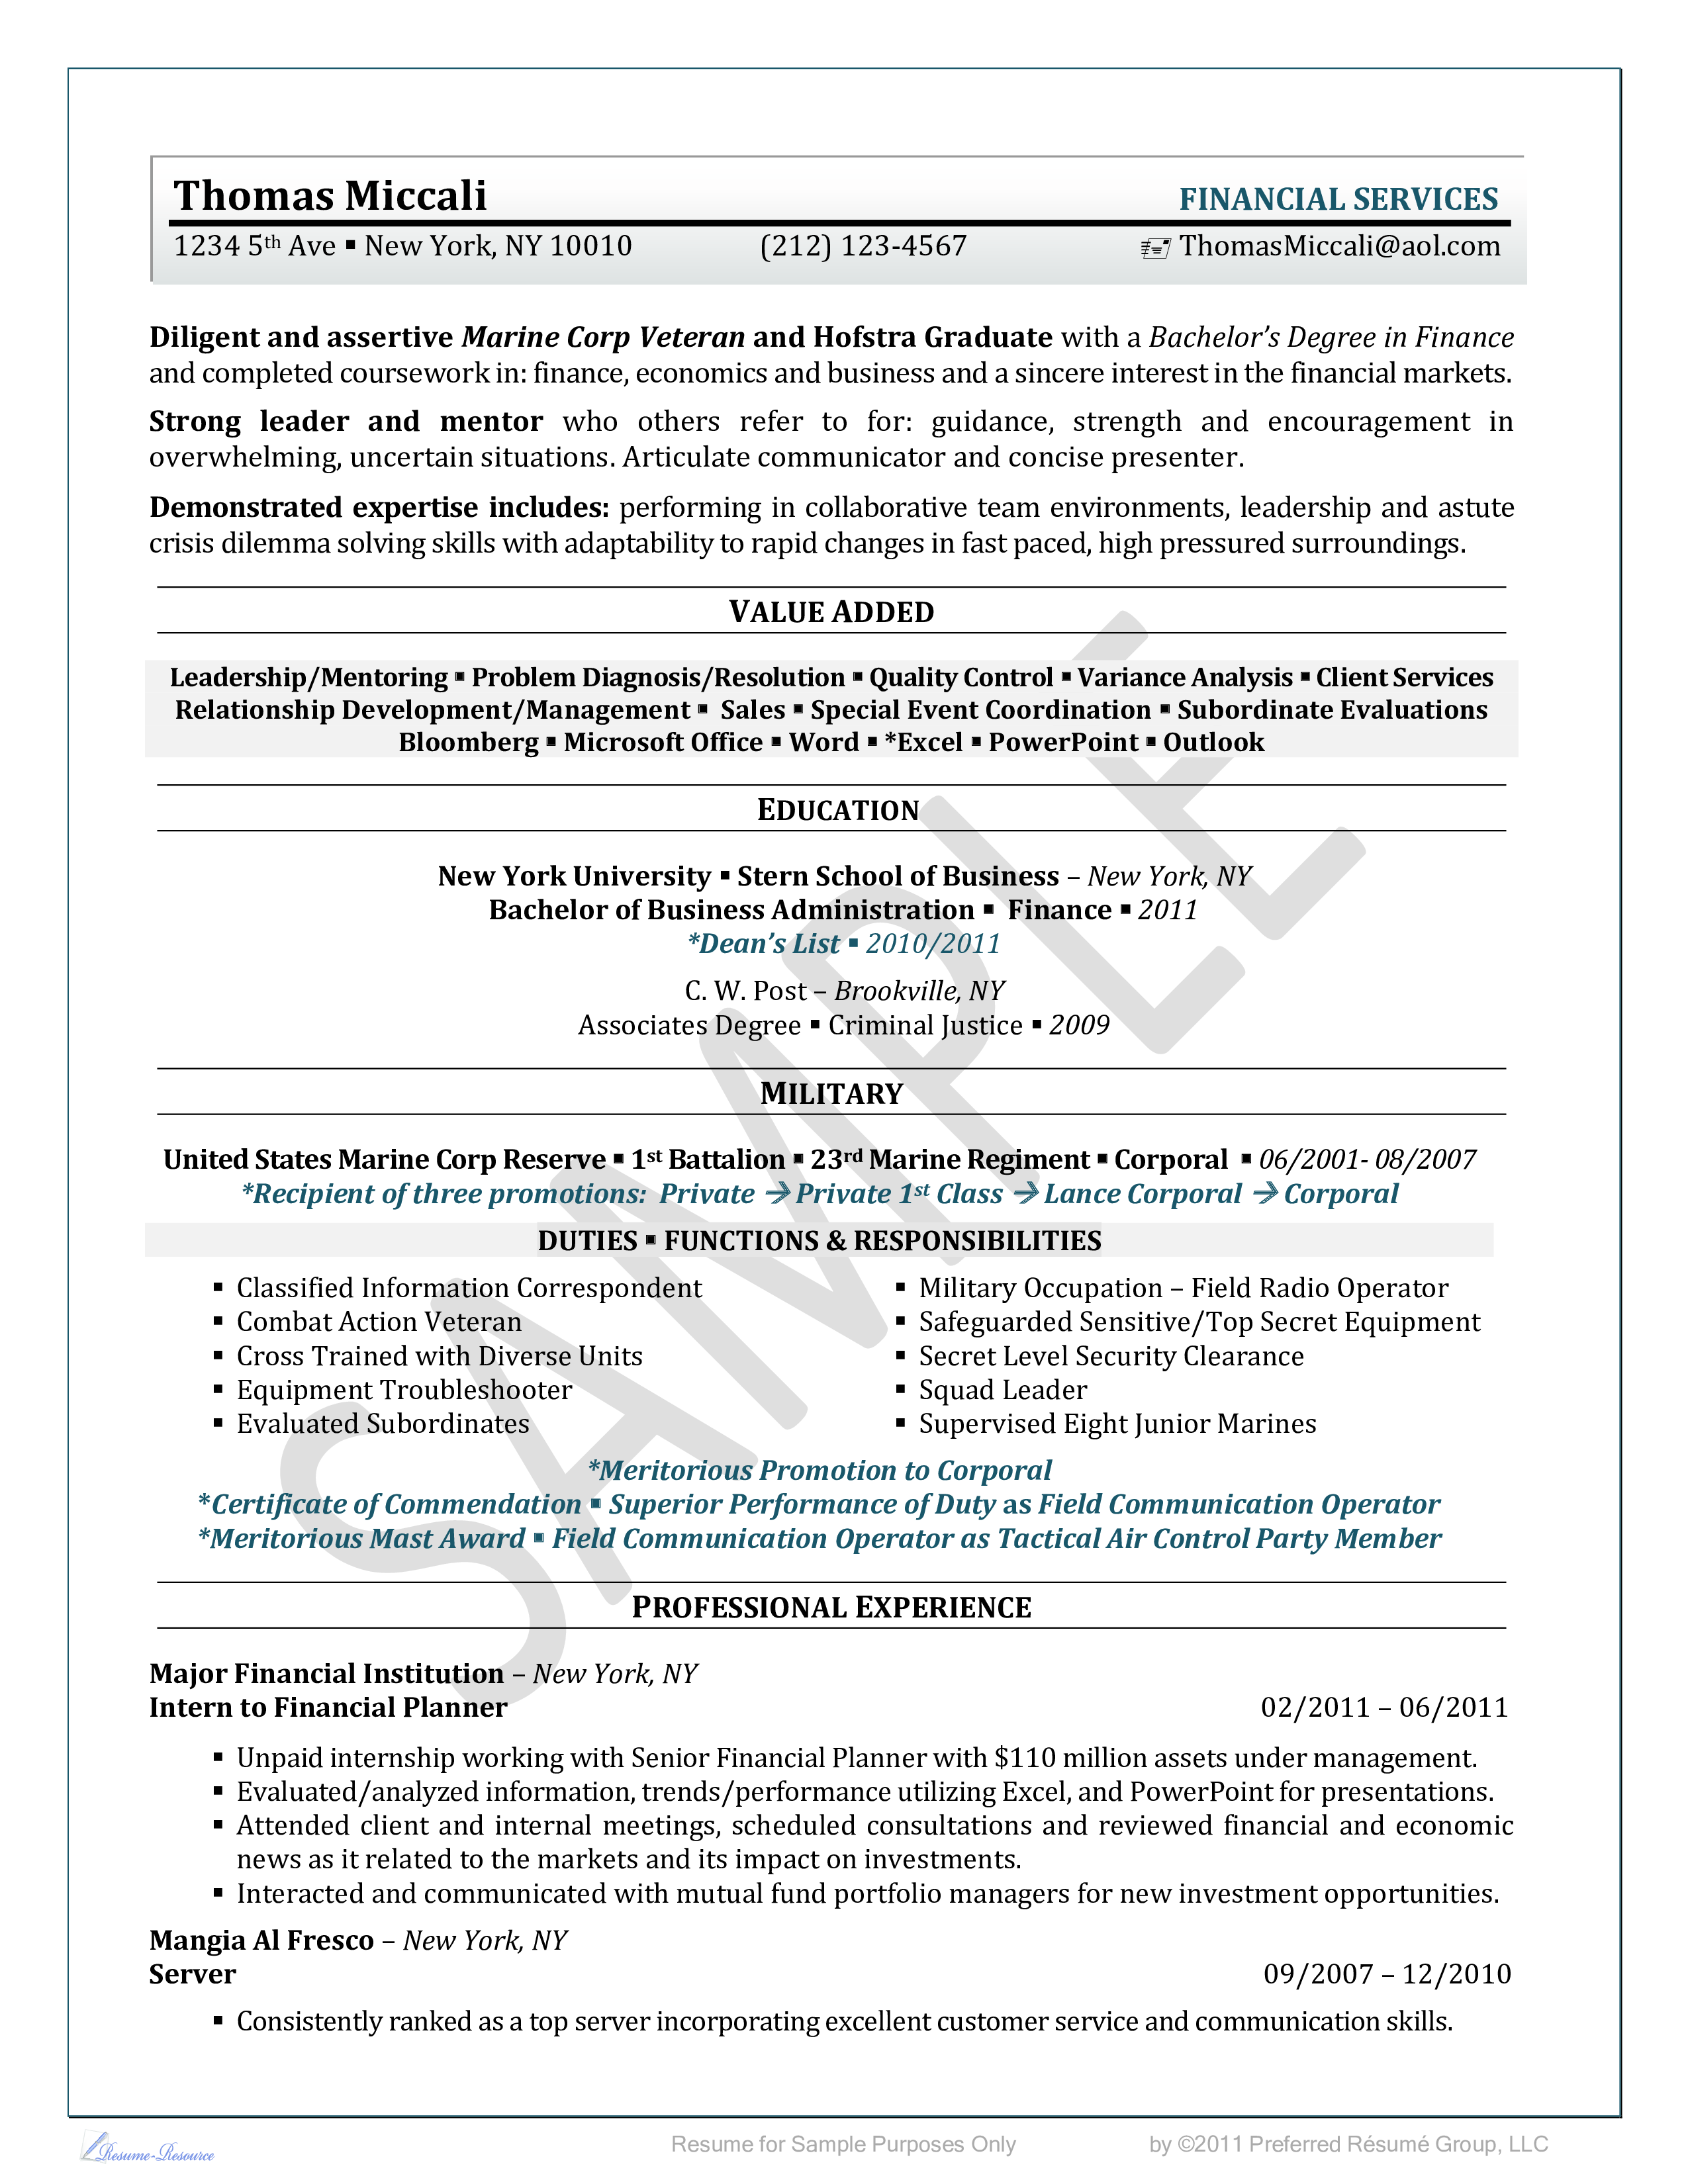 military-resume-template-templates-at-allbusinesstemplates